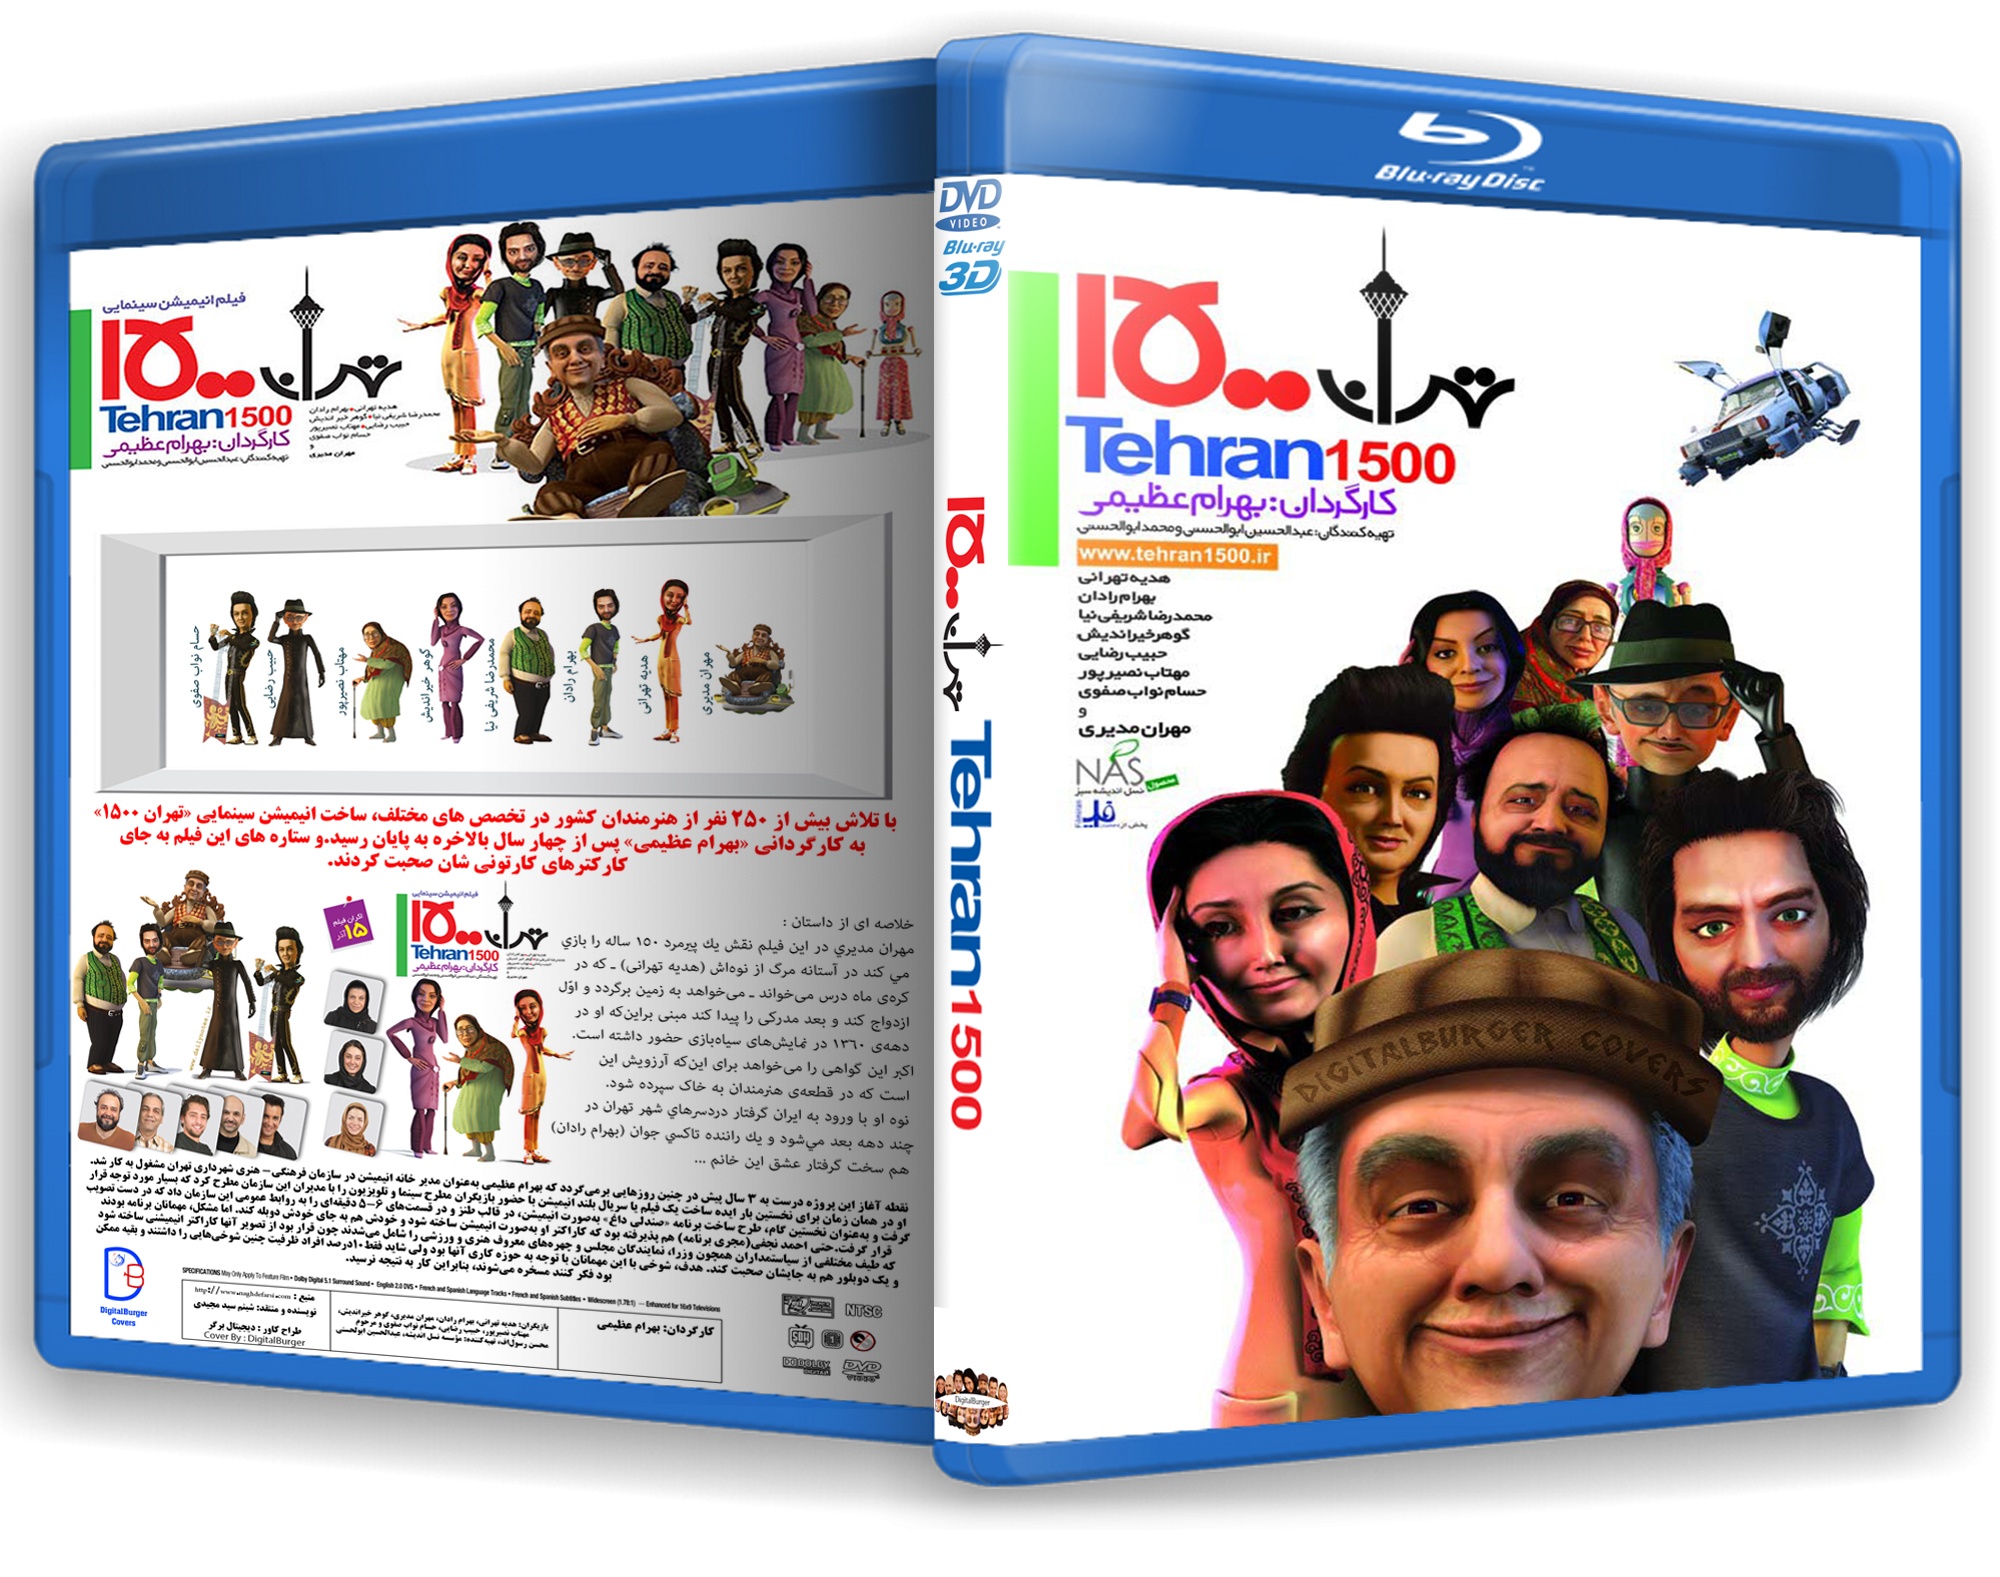 Tehran 1500 box cover